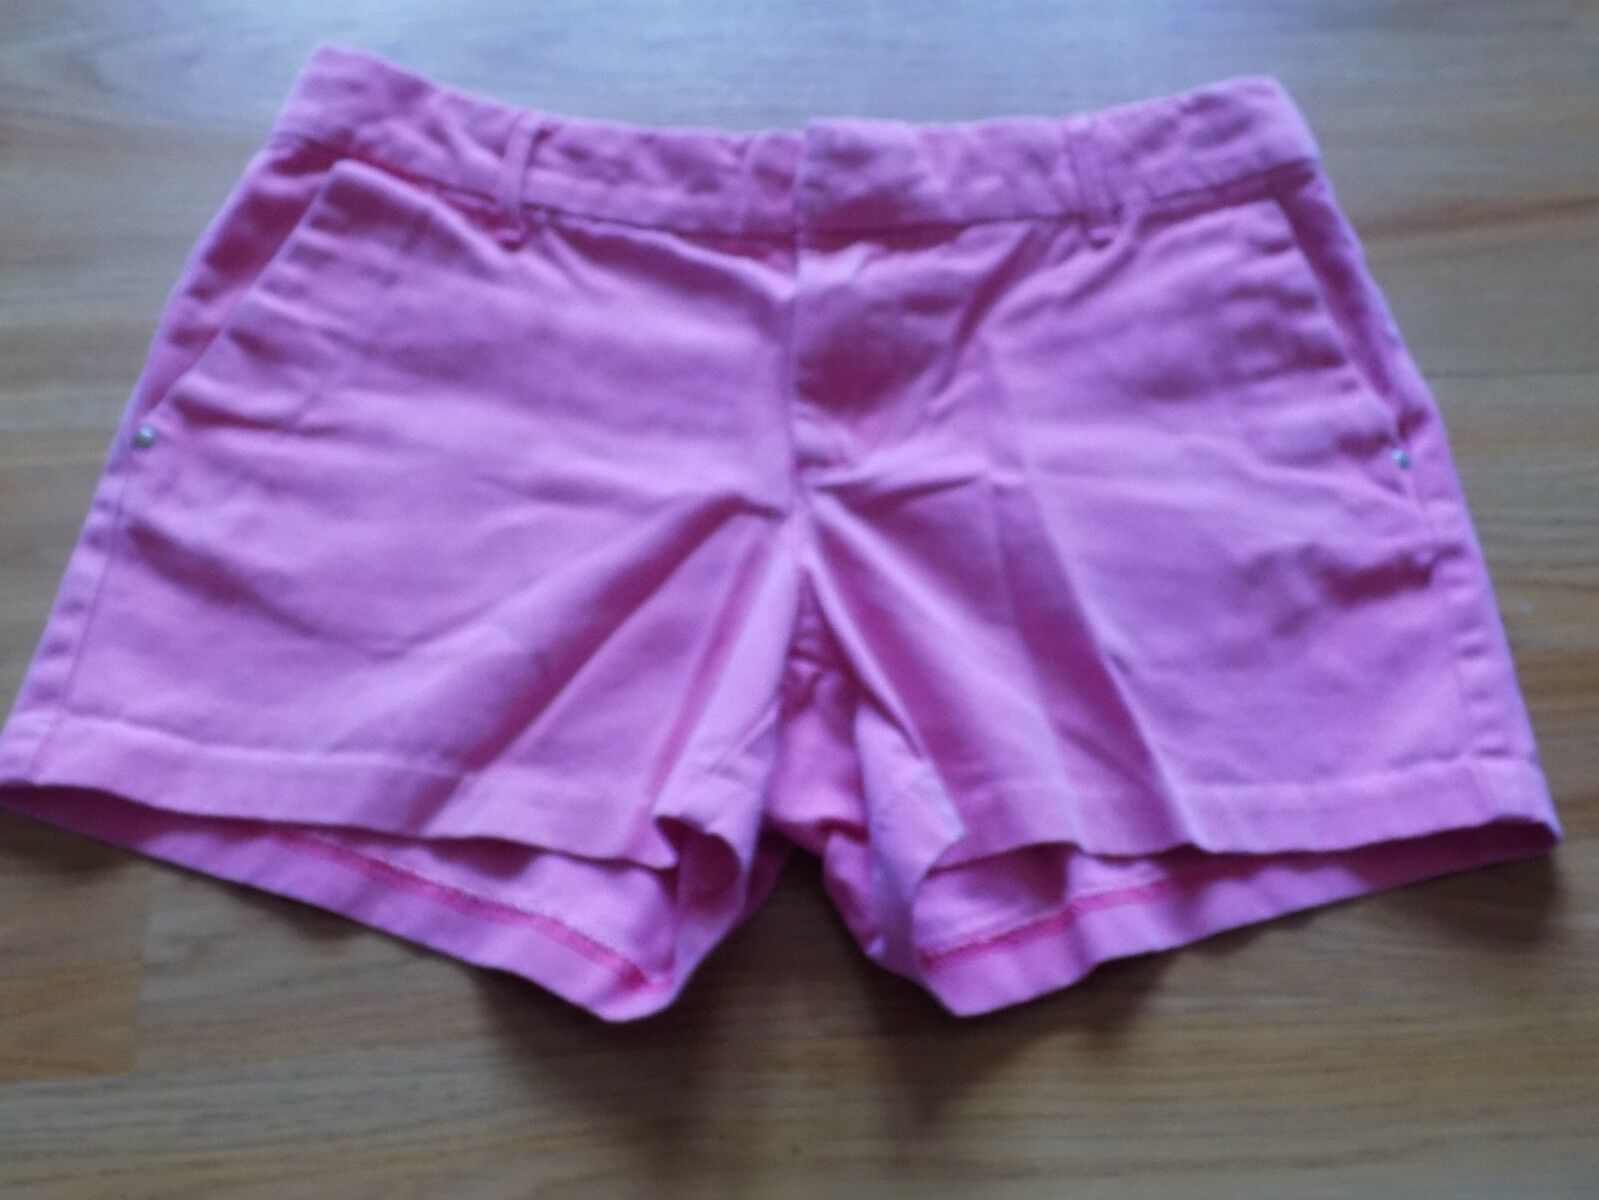 Girls Size 10 SO Solid Pink Cotton Summer Shorty Shorts Adjustable Waist EUC - $12.00